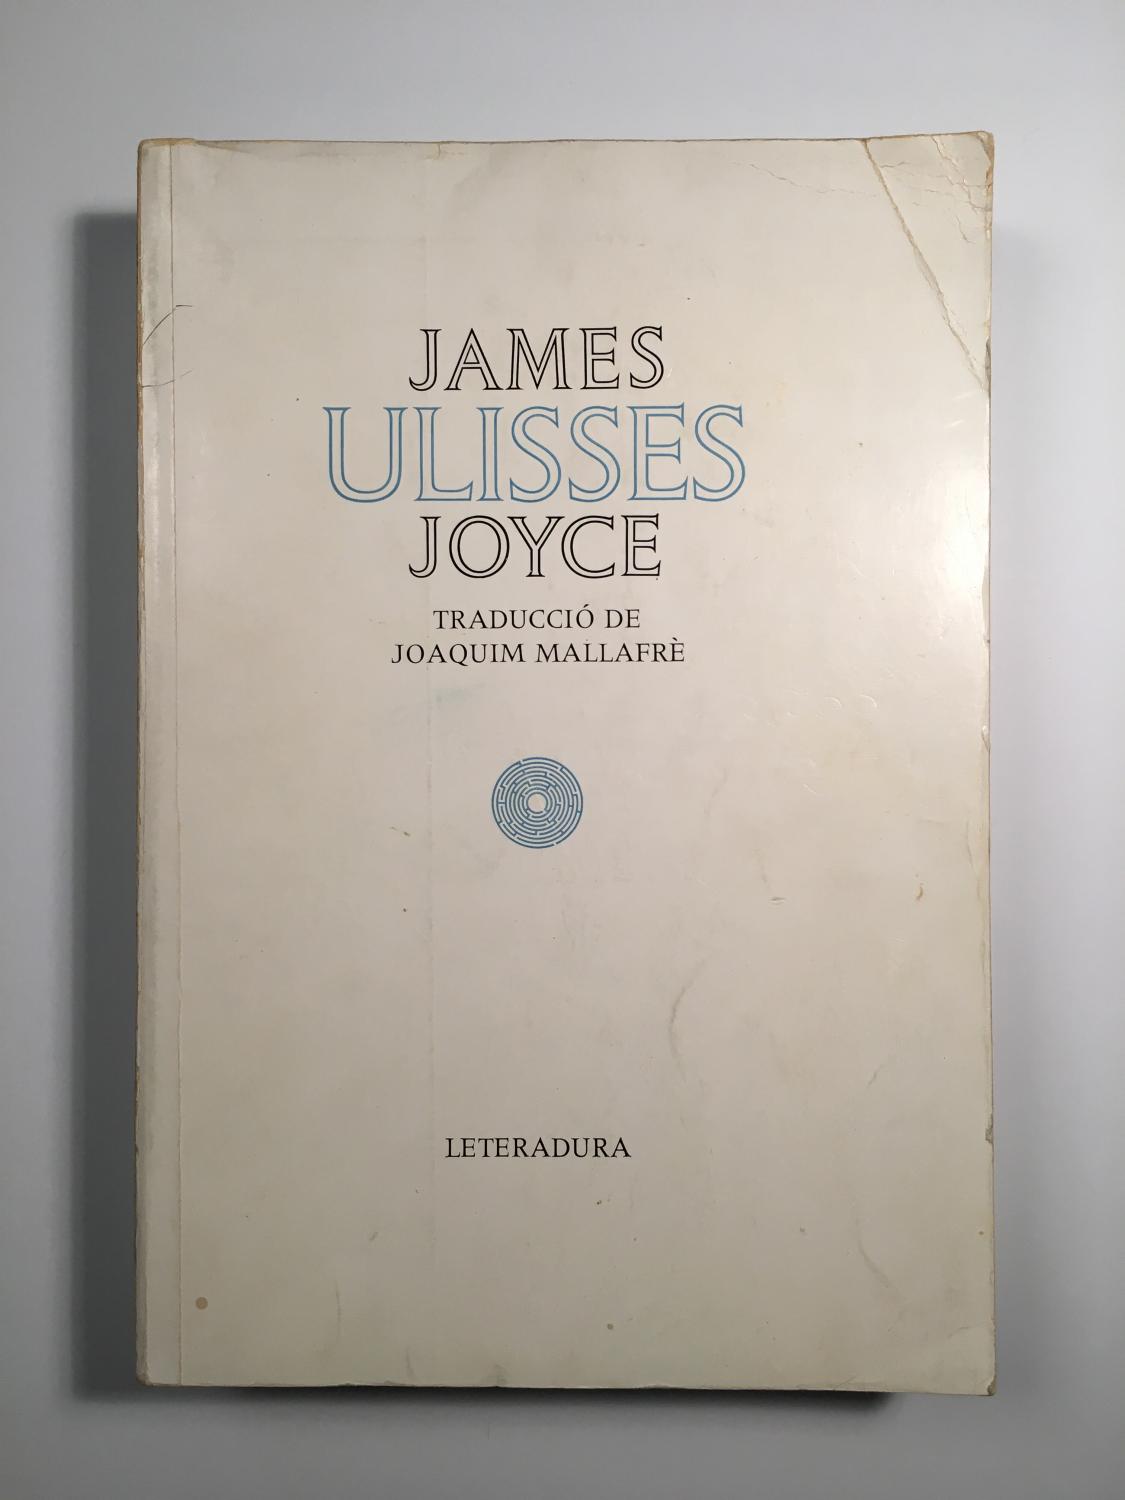 Ulisses - James Joyce